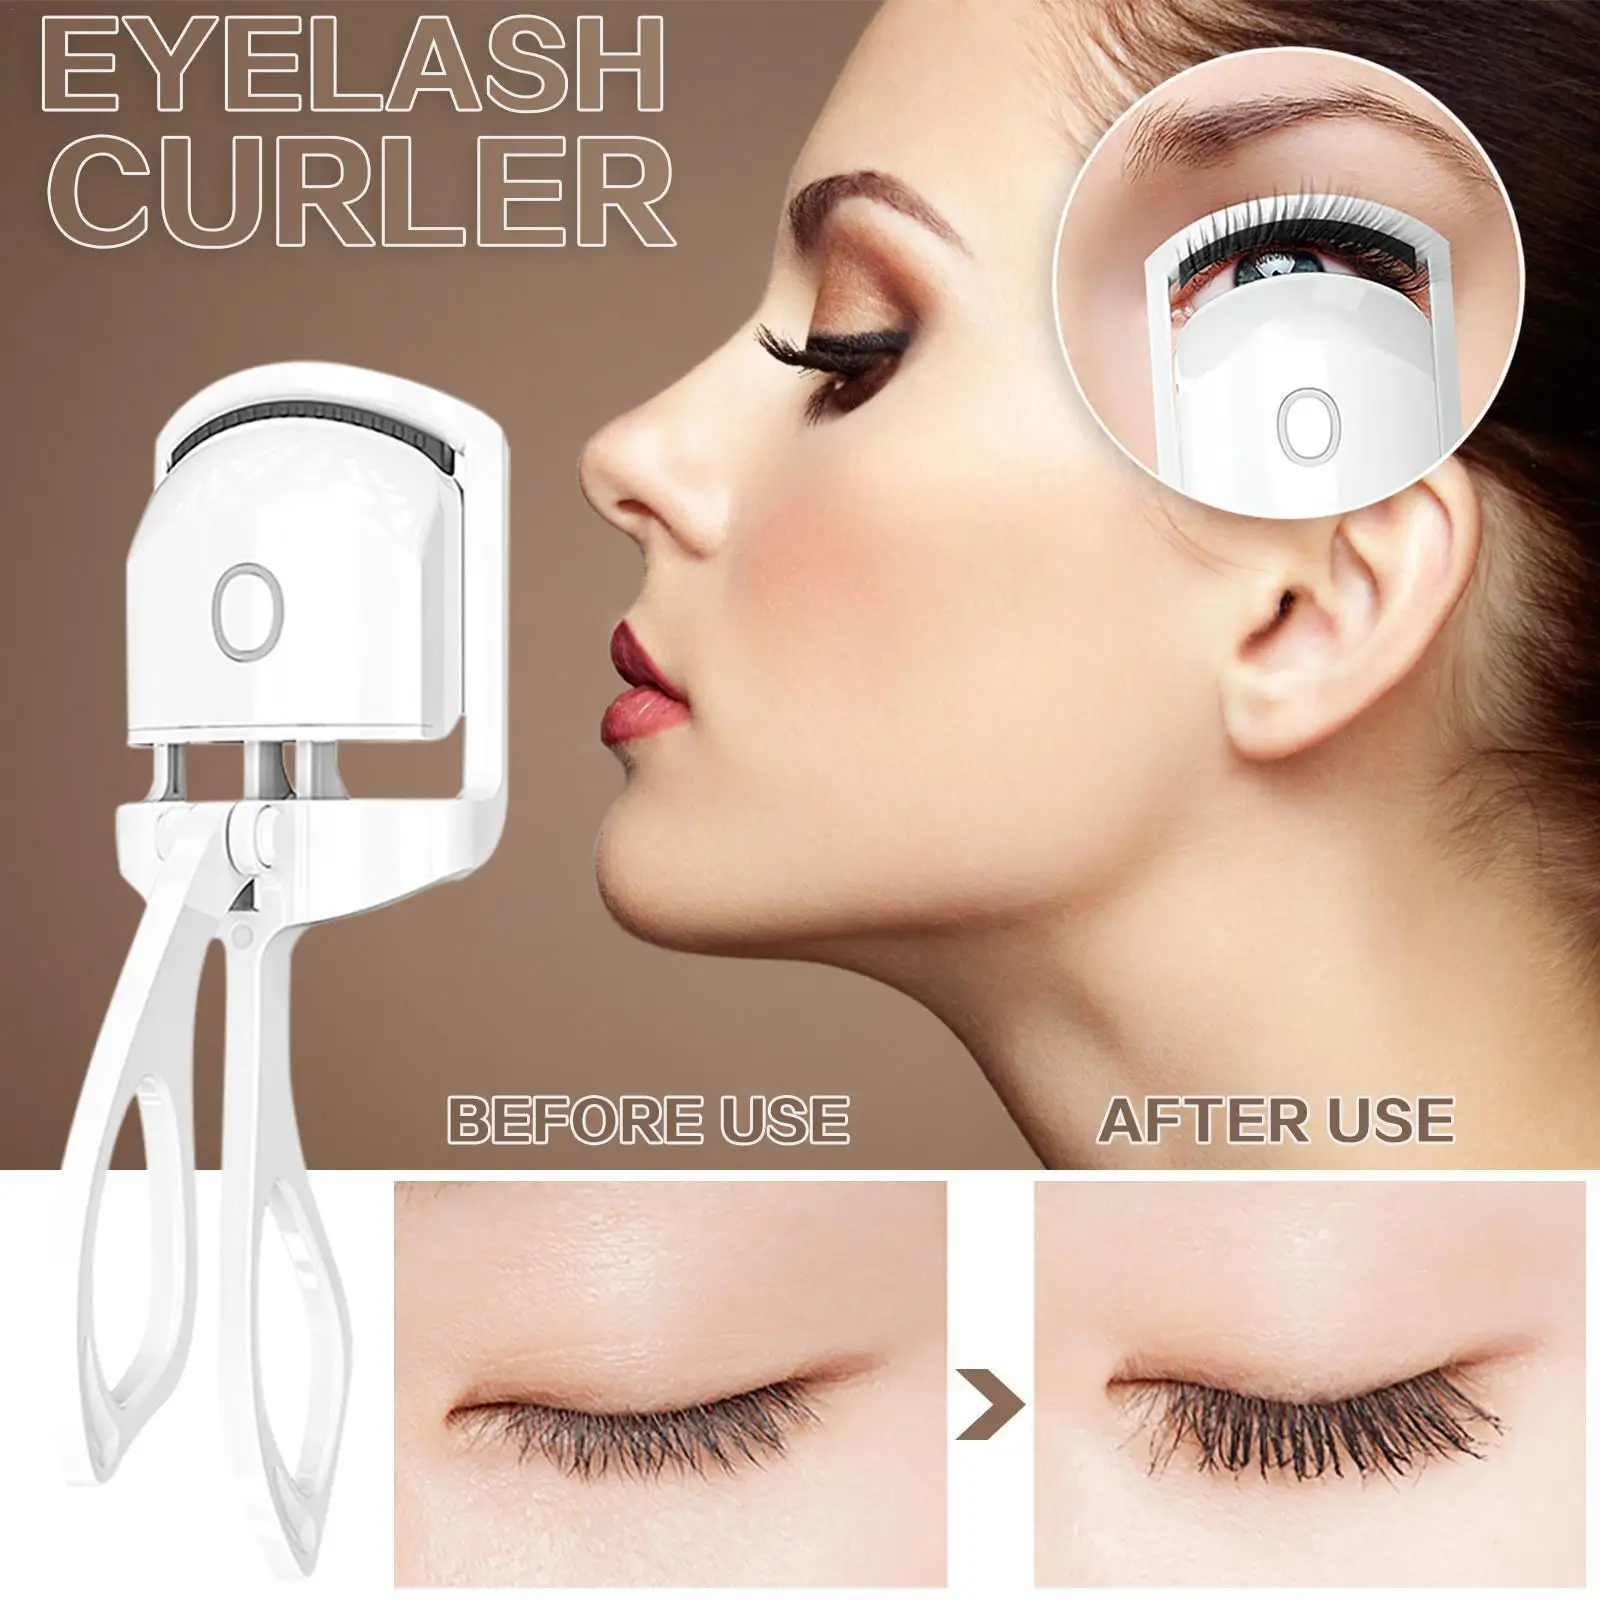 

Women's Eyelash Curler Fits All Eye Shapes Eyelashes Curling Tweezers Long Lasting Professional Eye Makeup Accessories Tools